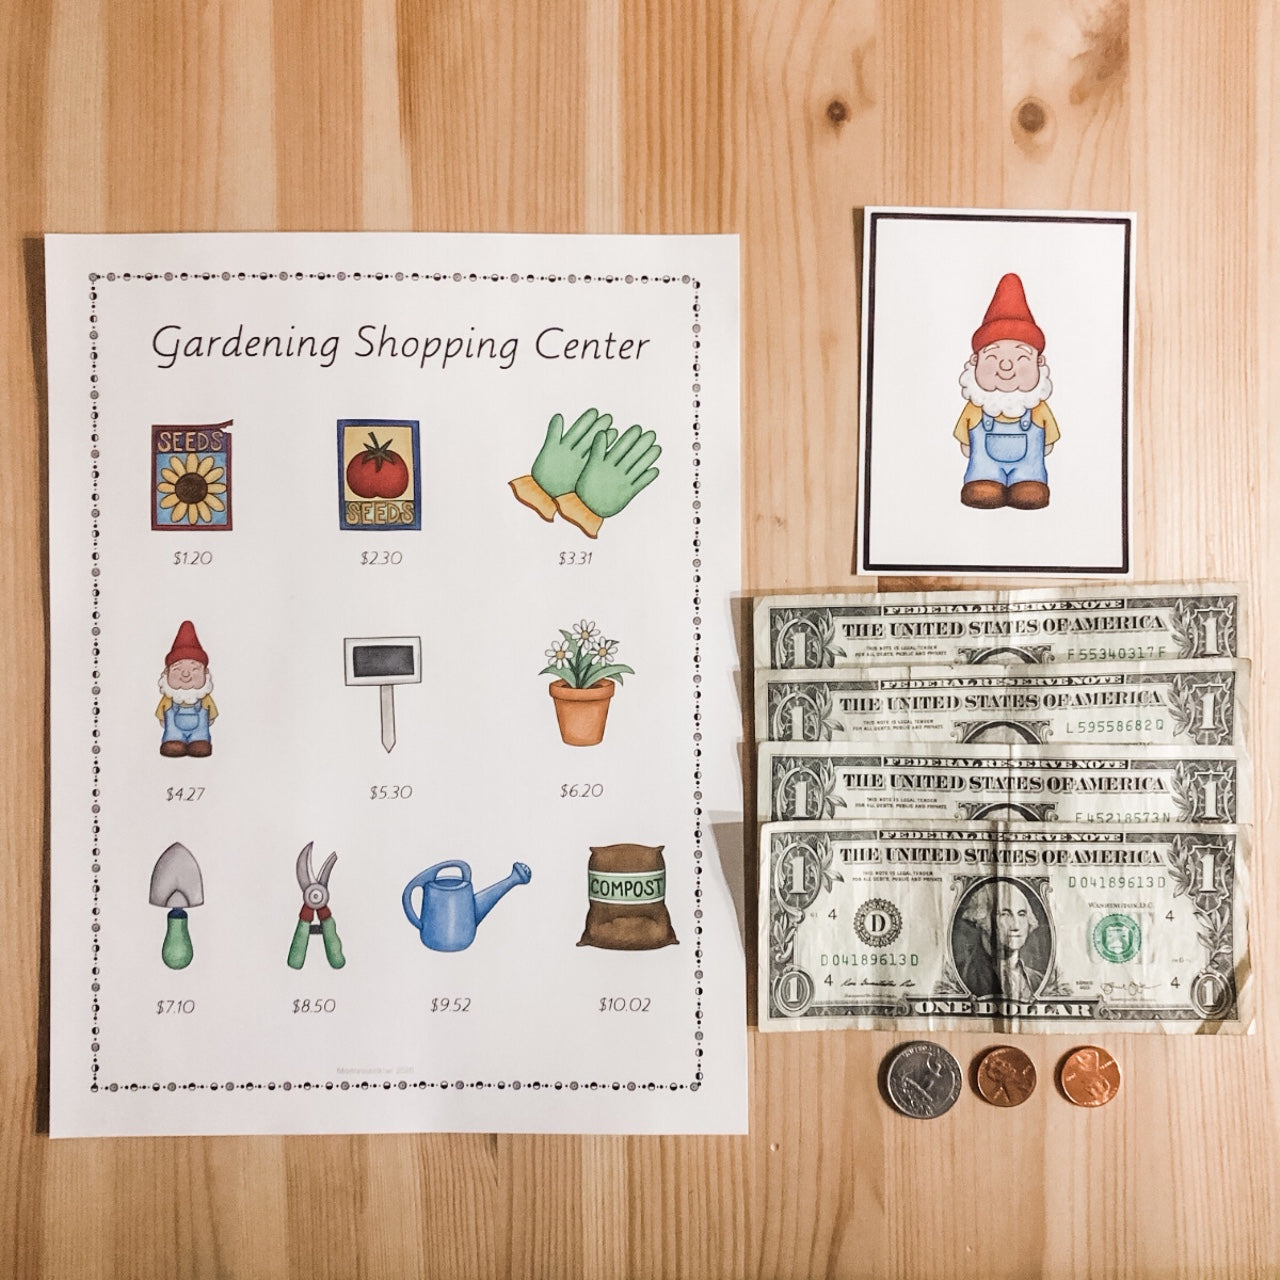 Spring Money Bundle (Montessori Inspired) - montessorikiwi